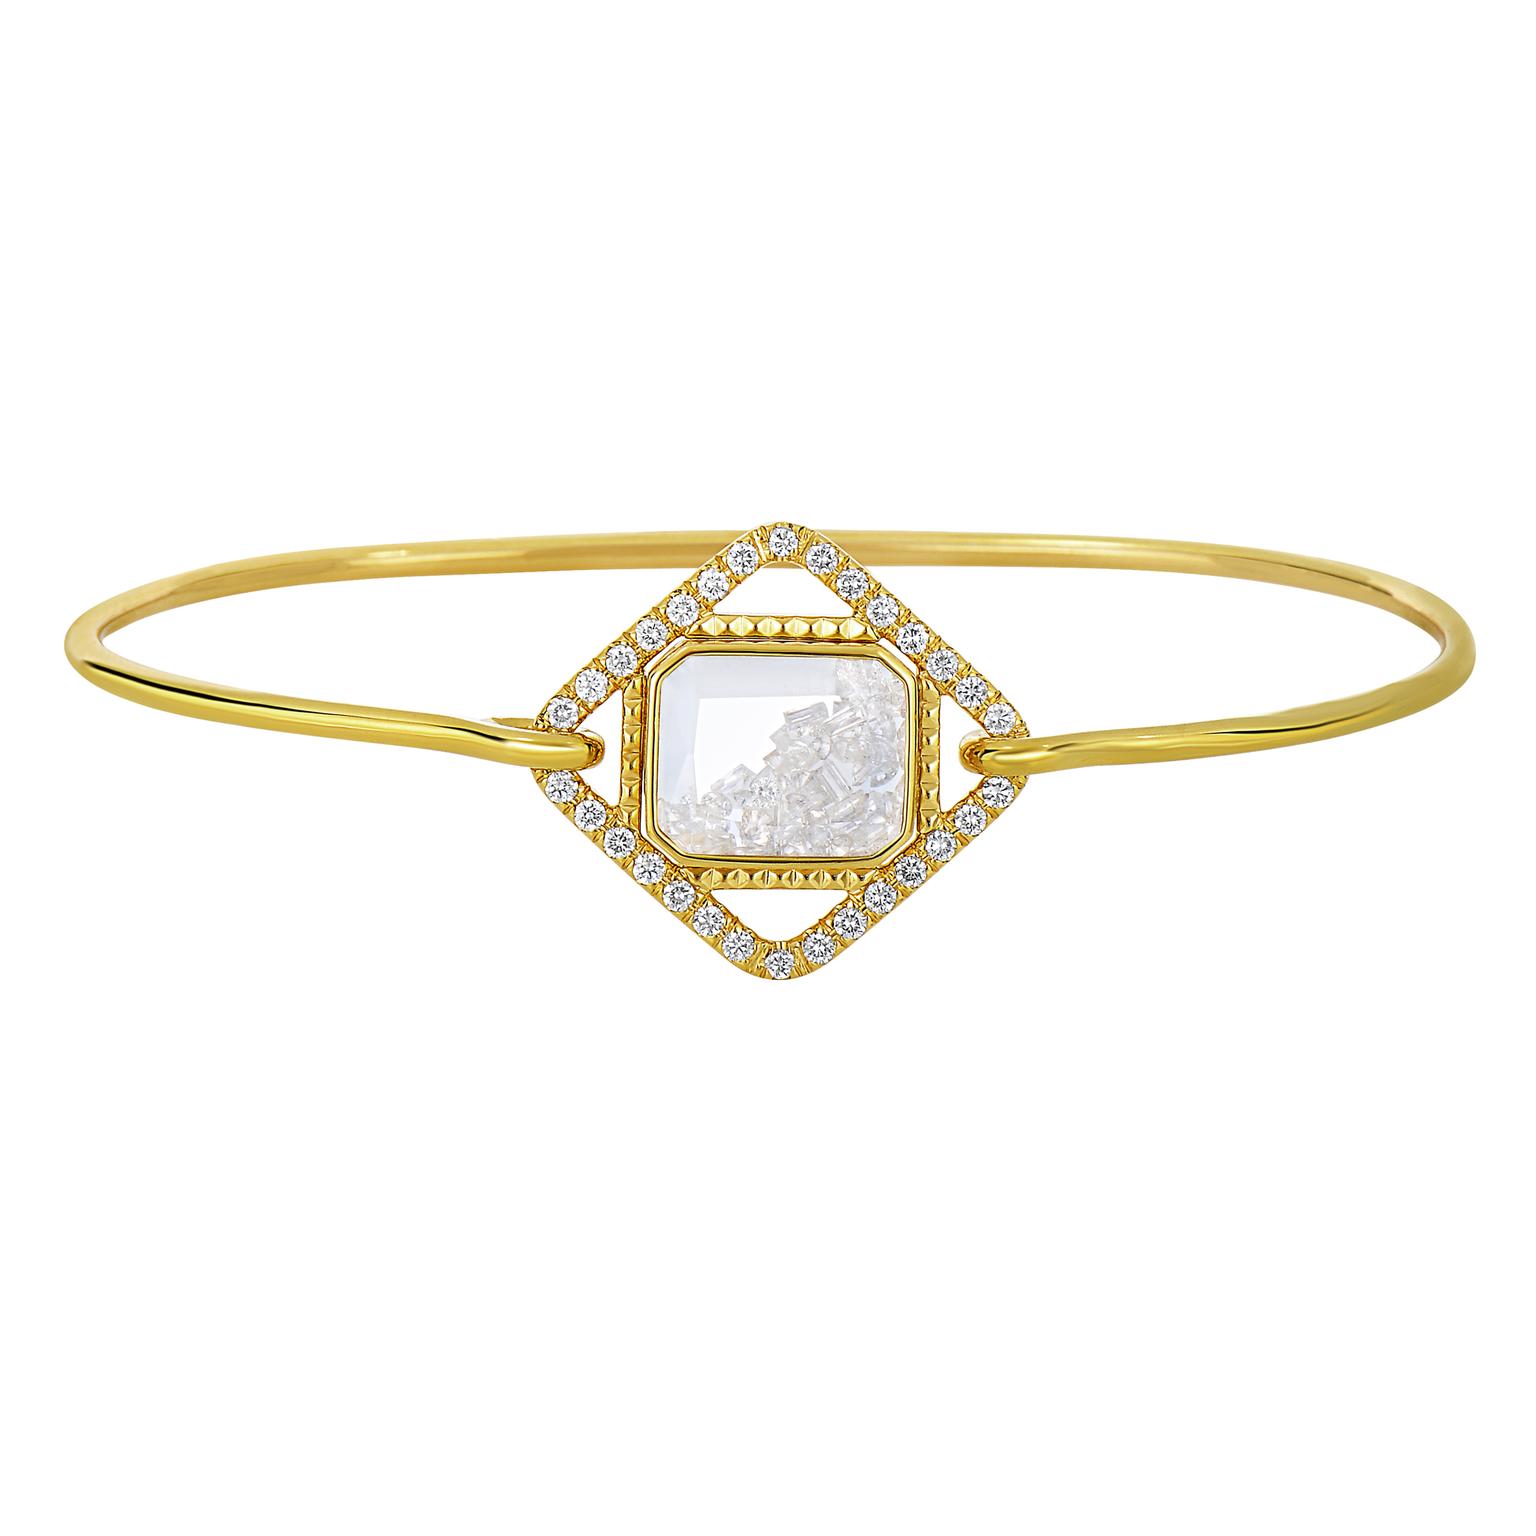 Moritz Glik diamond and white sapphire bracelet in yellow gold